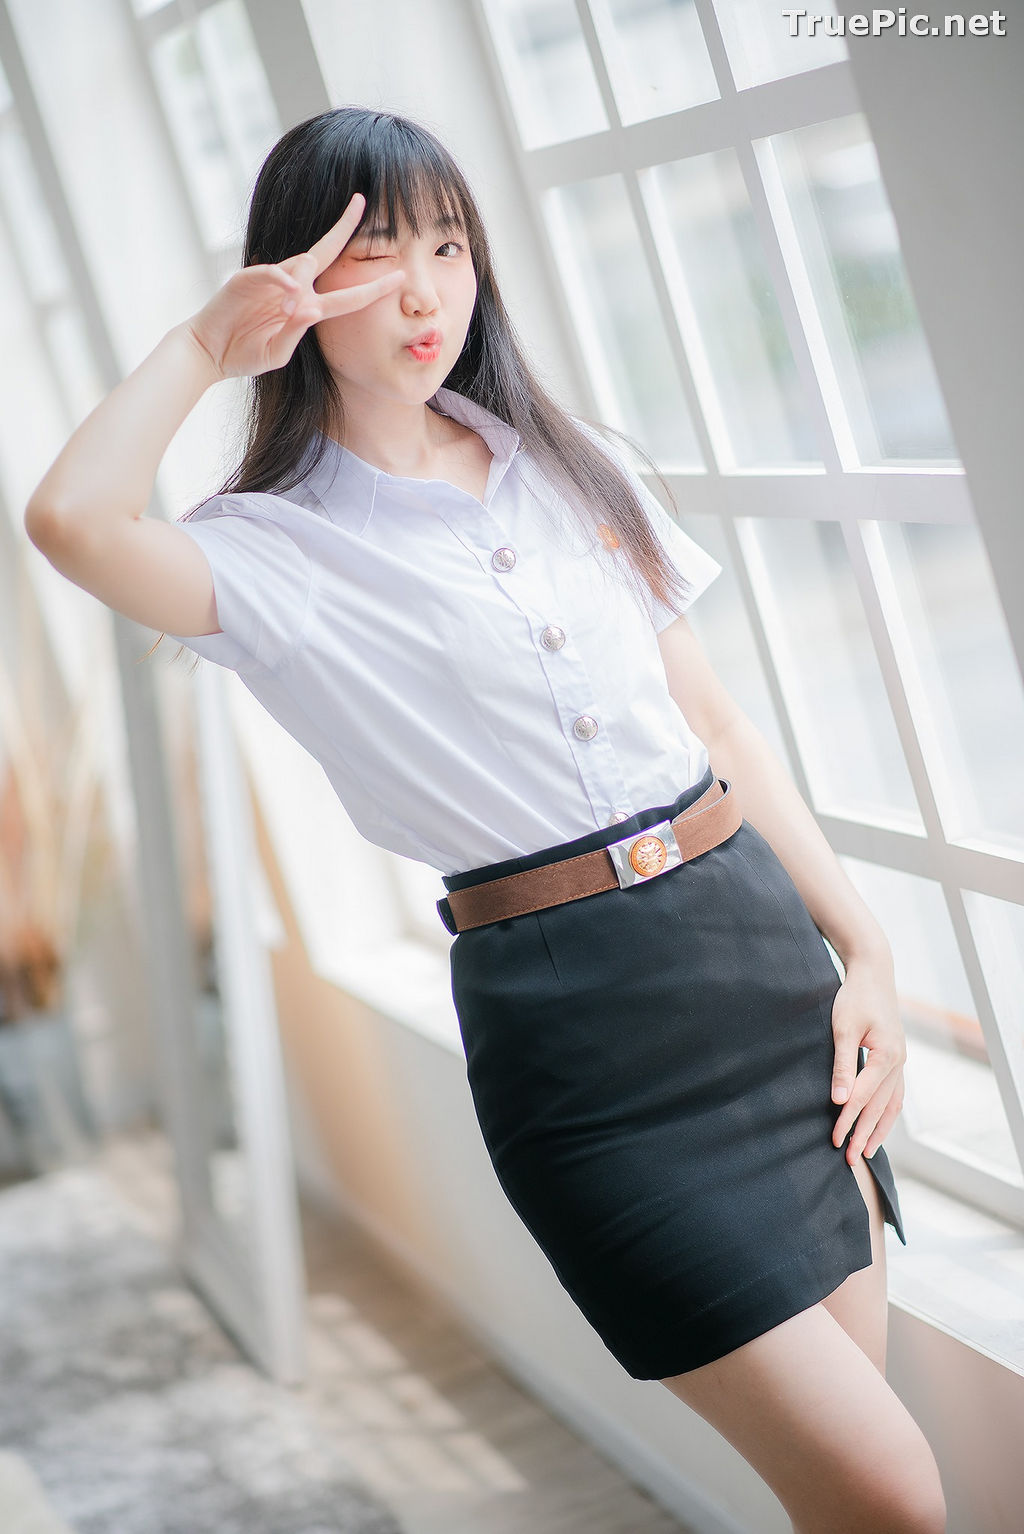 Image Thailand Model - Miki Ariyathanakit - Cute Student Girl - TruePic.net - Picture-16